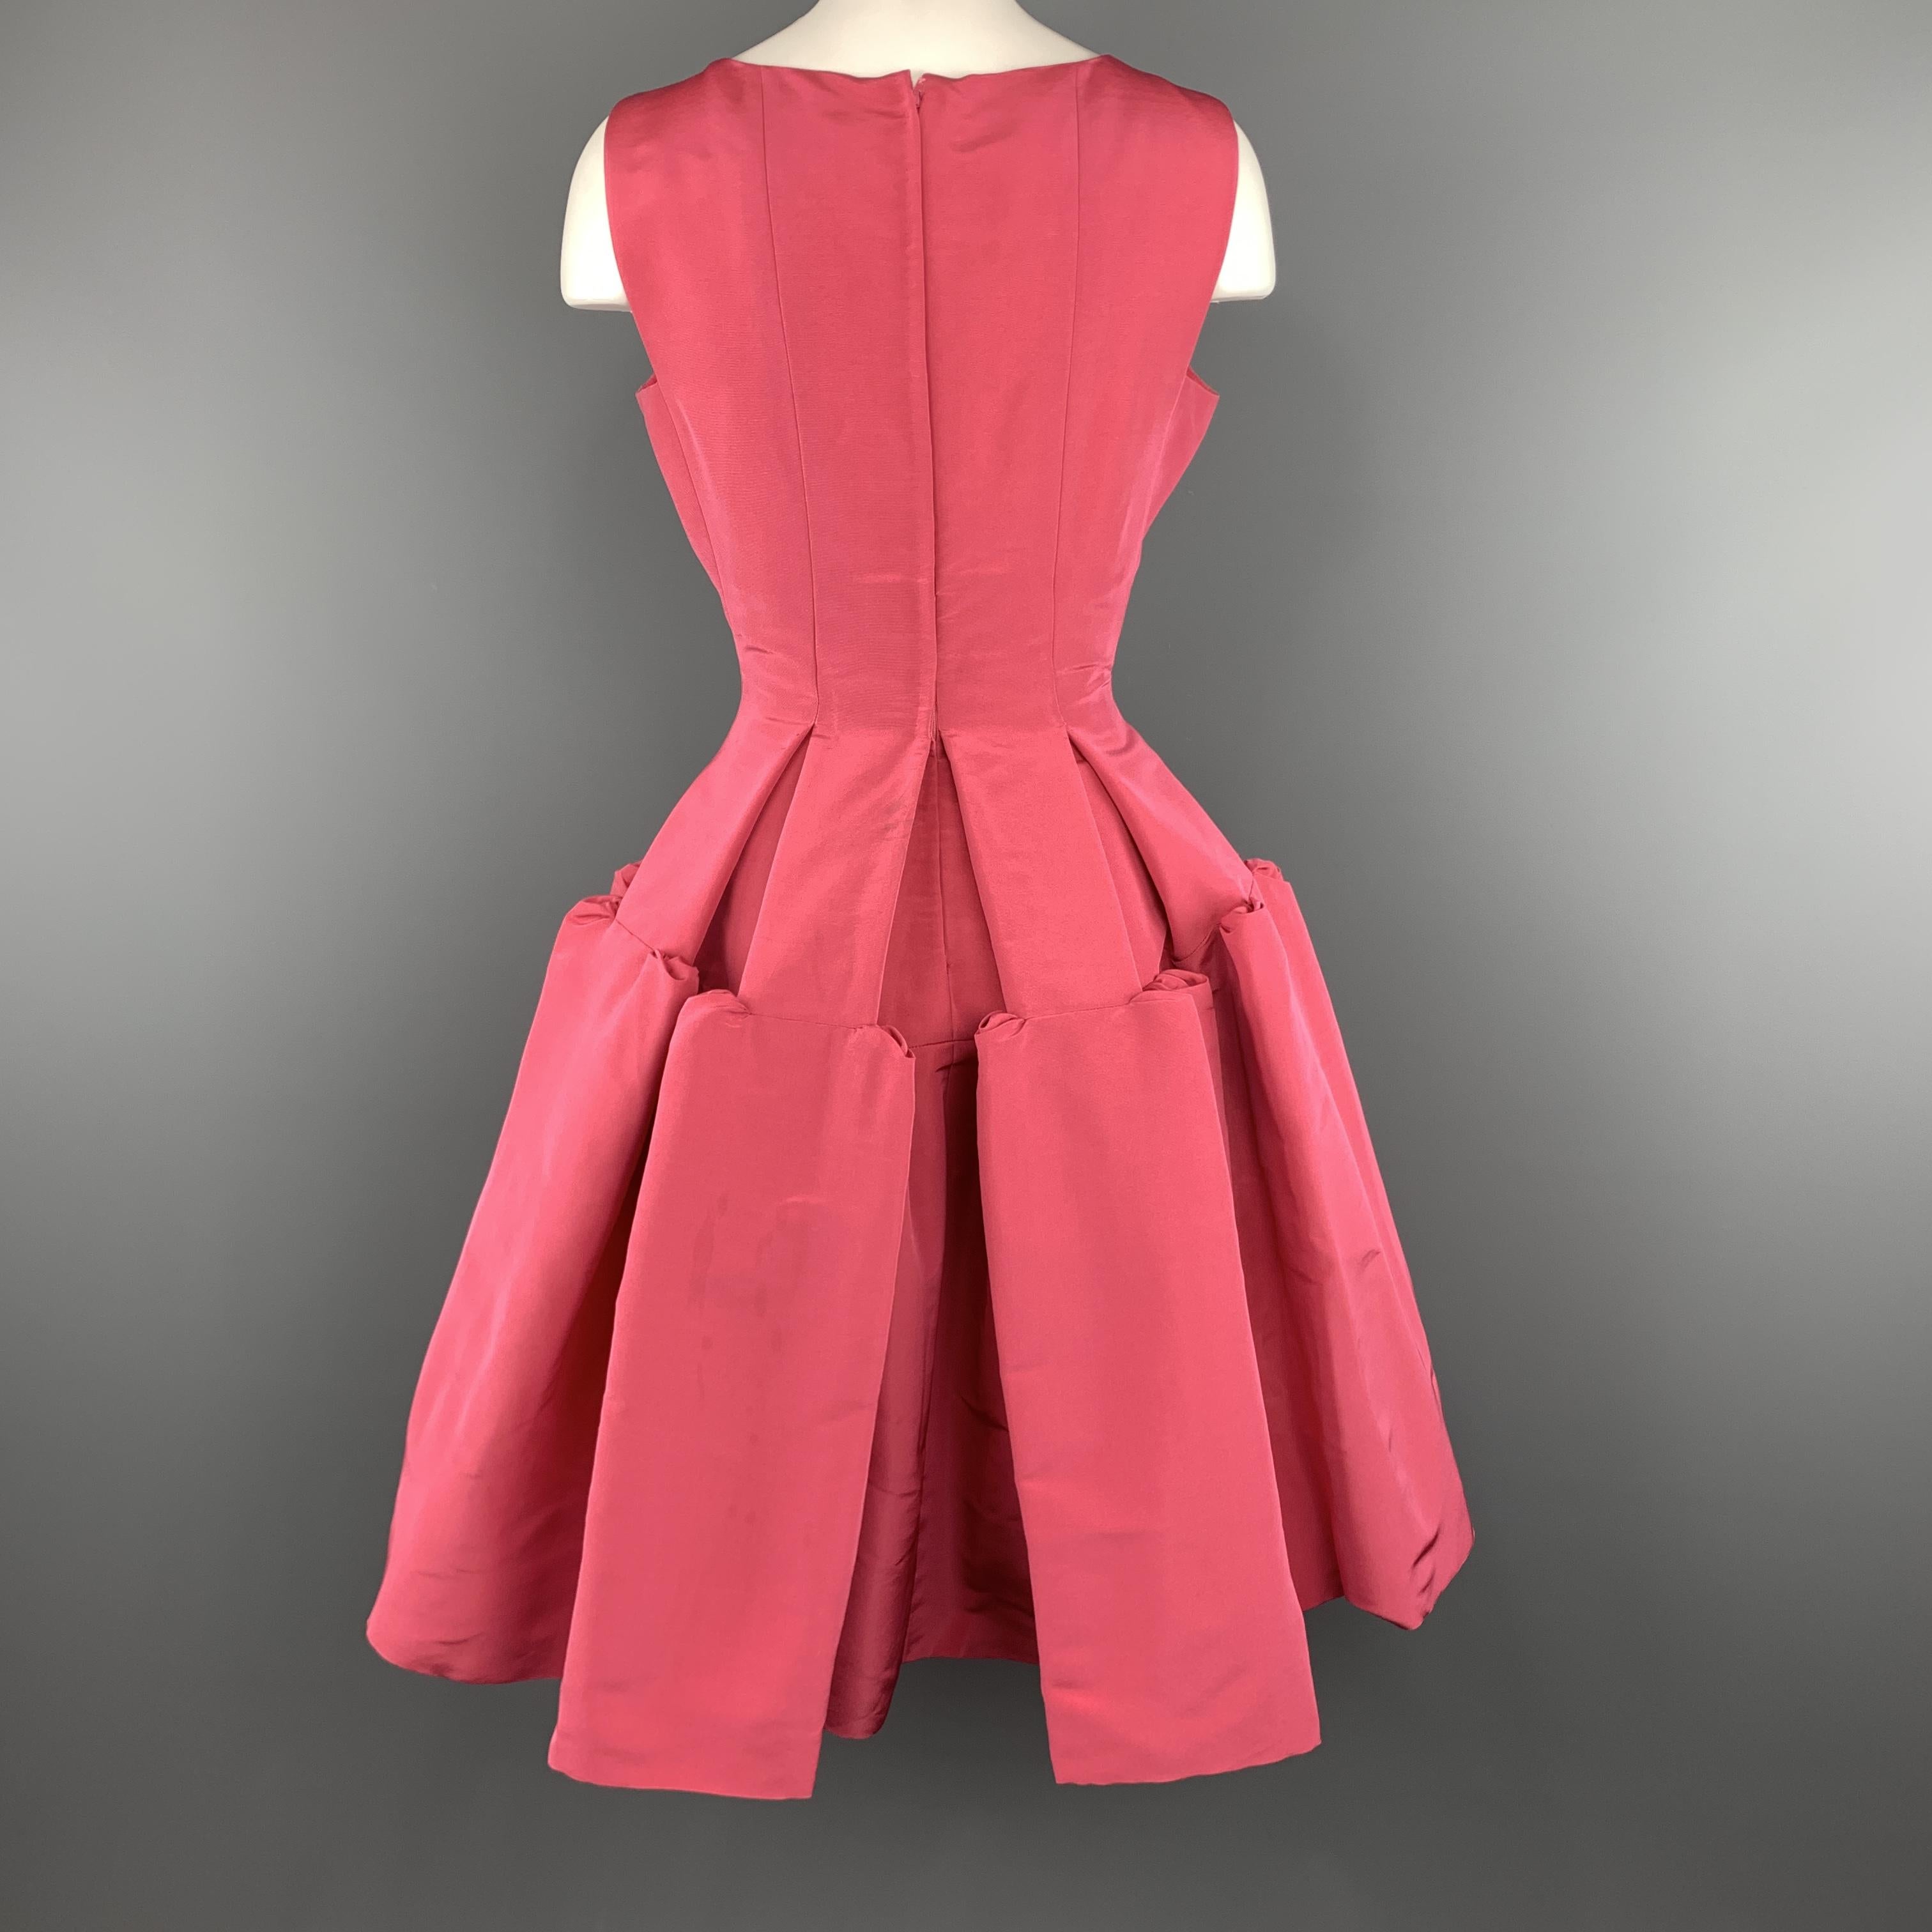 OSCAR DE LA RENTA Size 8 Pink Faille Structured Skirt Cocktail Dress 2